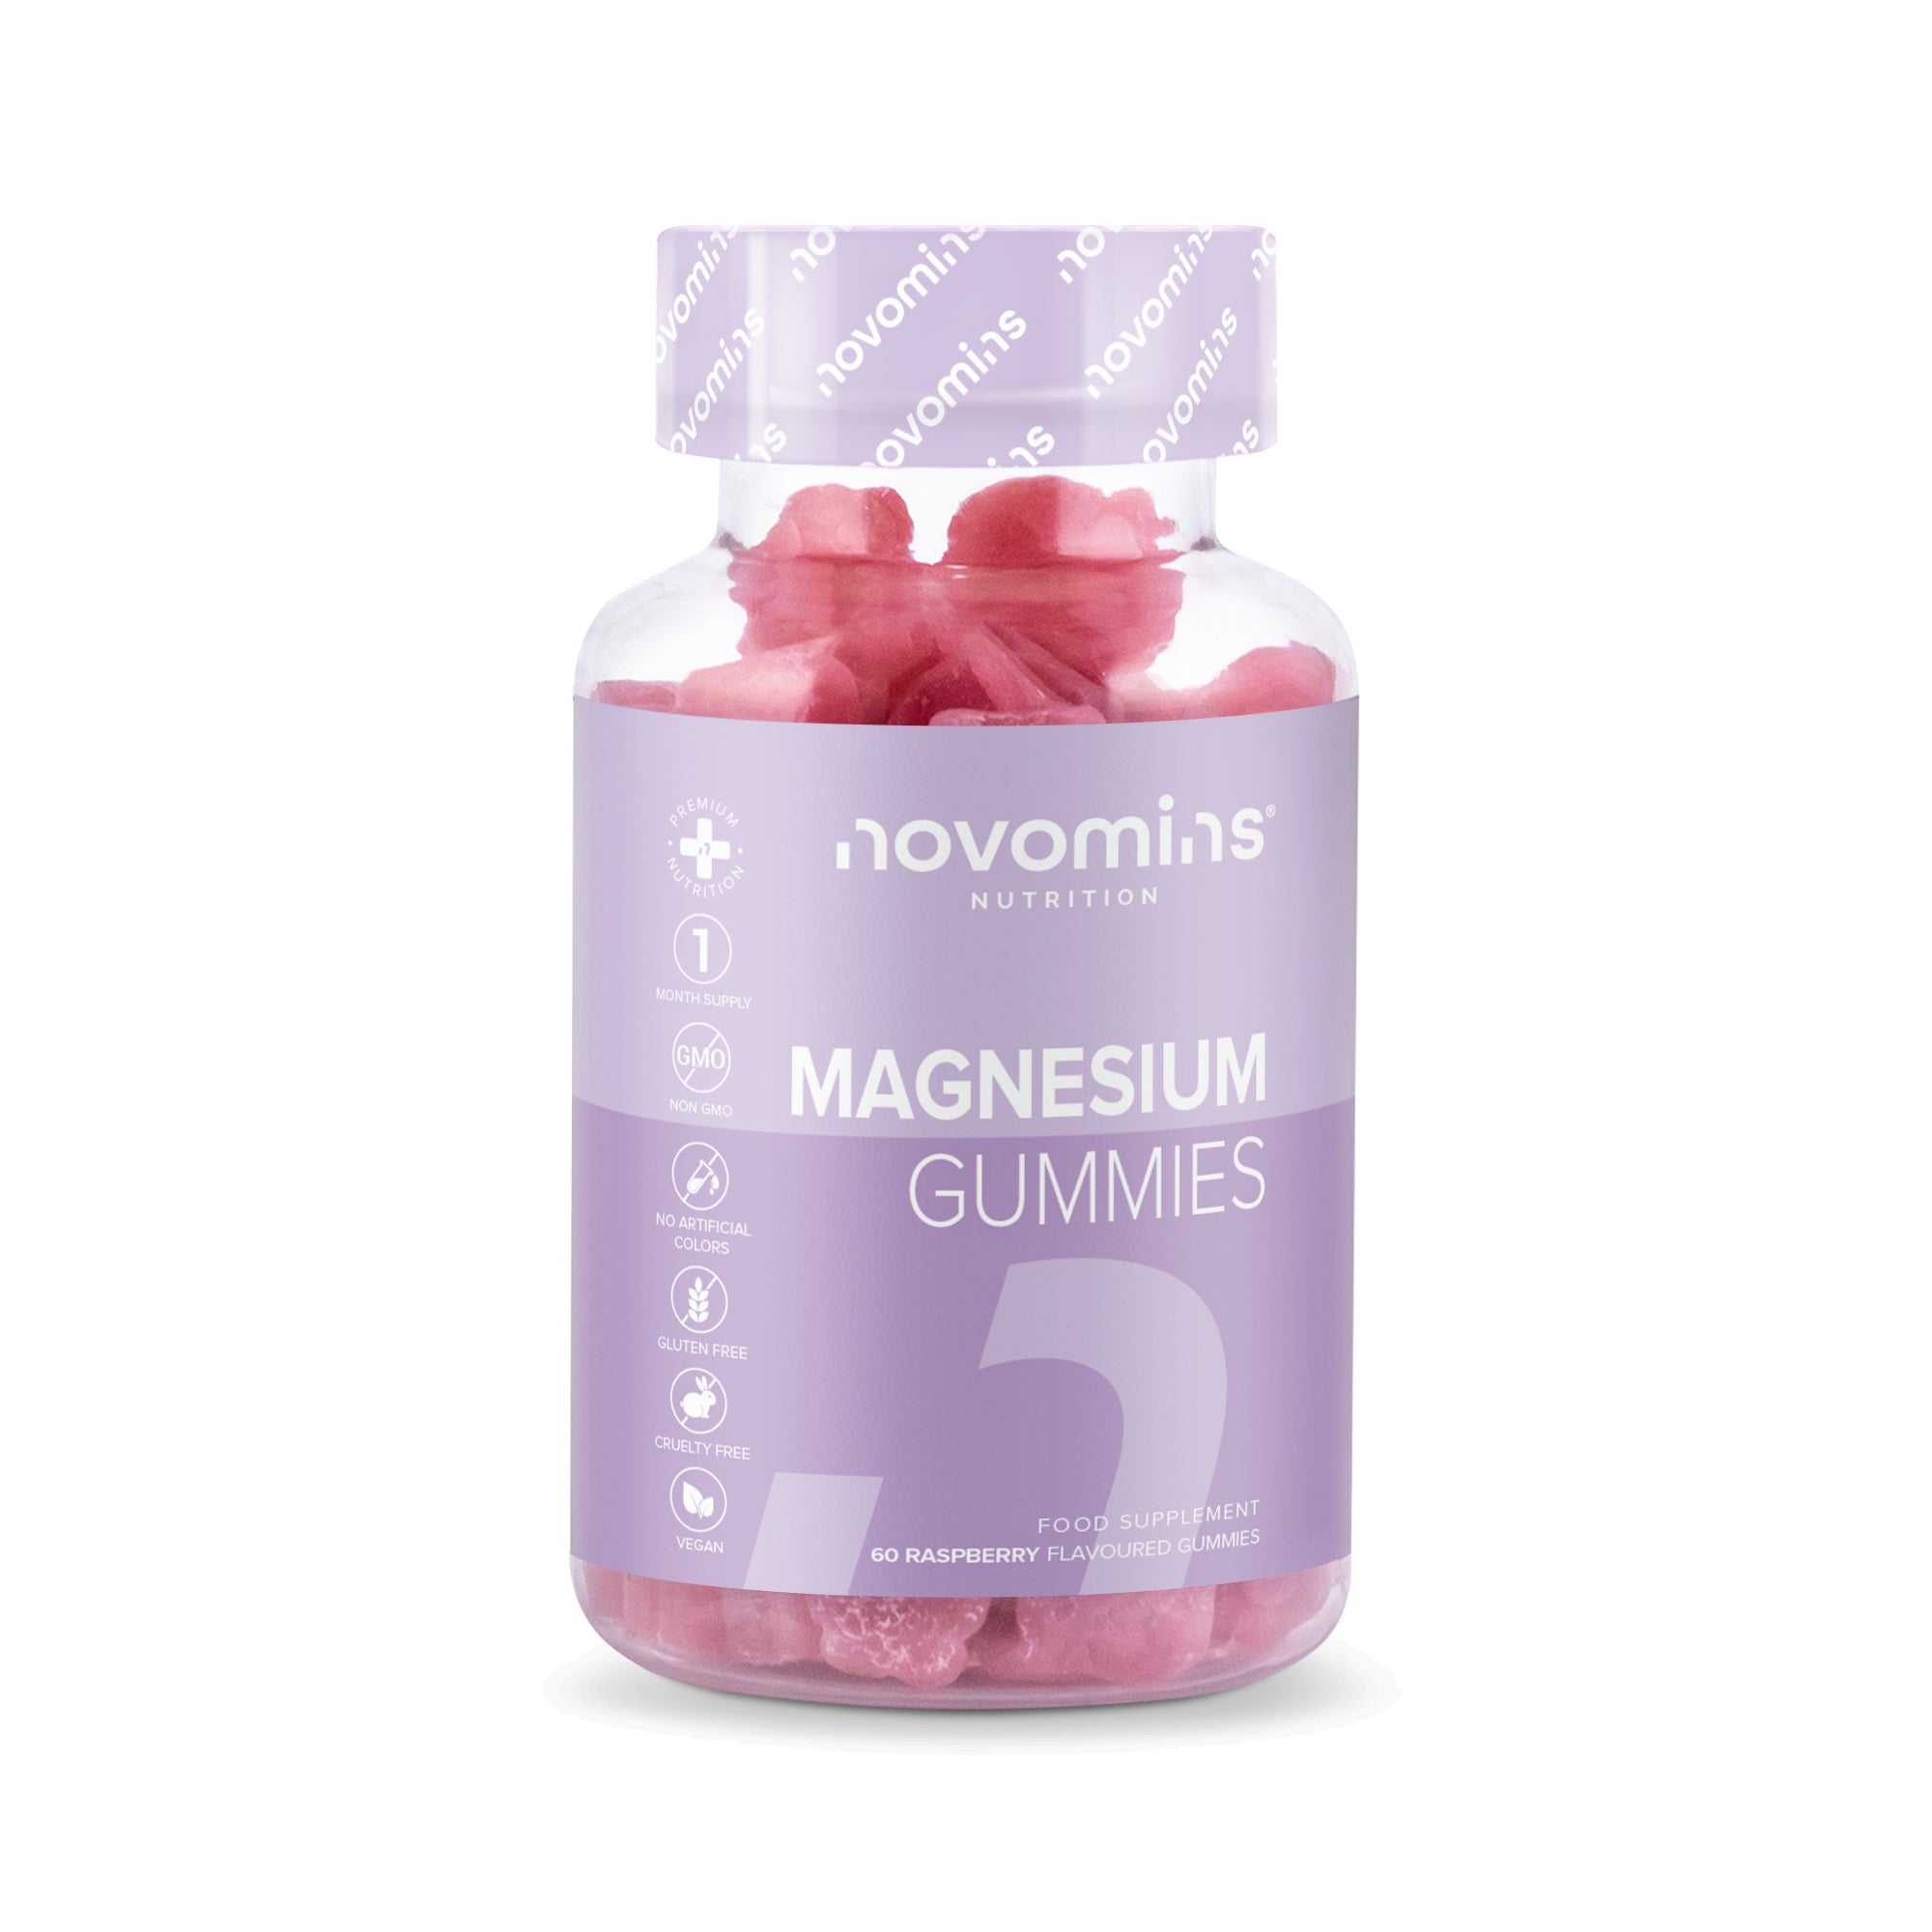 Novomins Magnesium Gummies